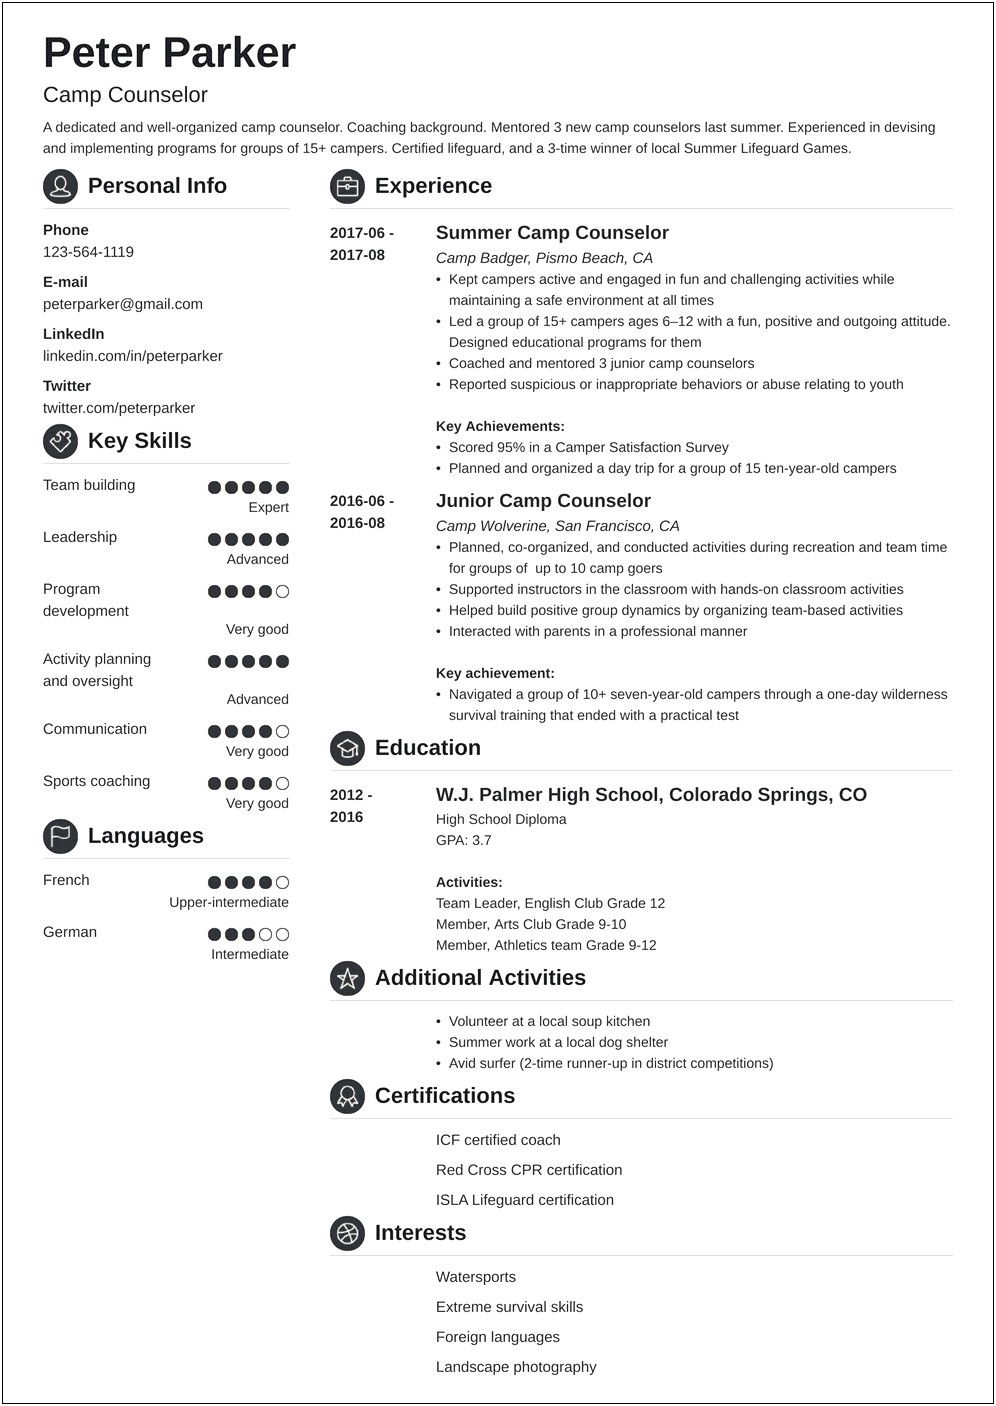 Resume Job Description For Camp Counselor